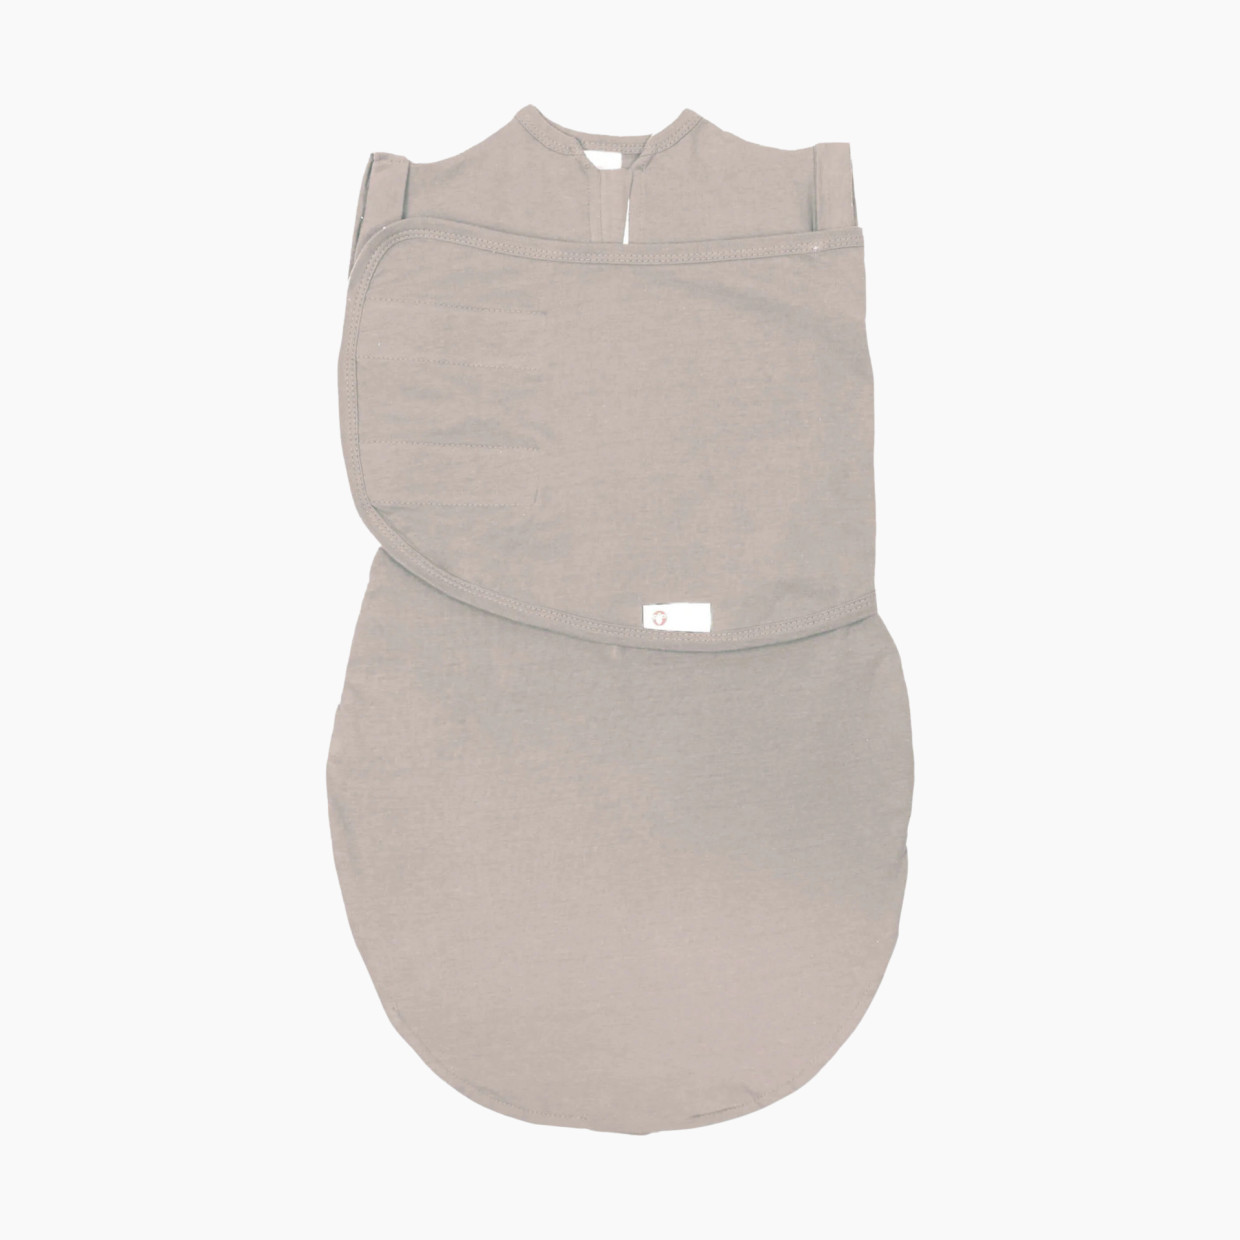 Embe Babies Short Sleeve Swaddle Sack - Chai, Medium/Large 12-18 Lbs ...